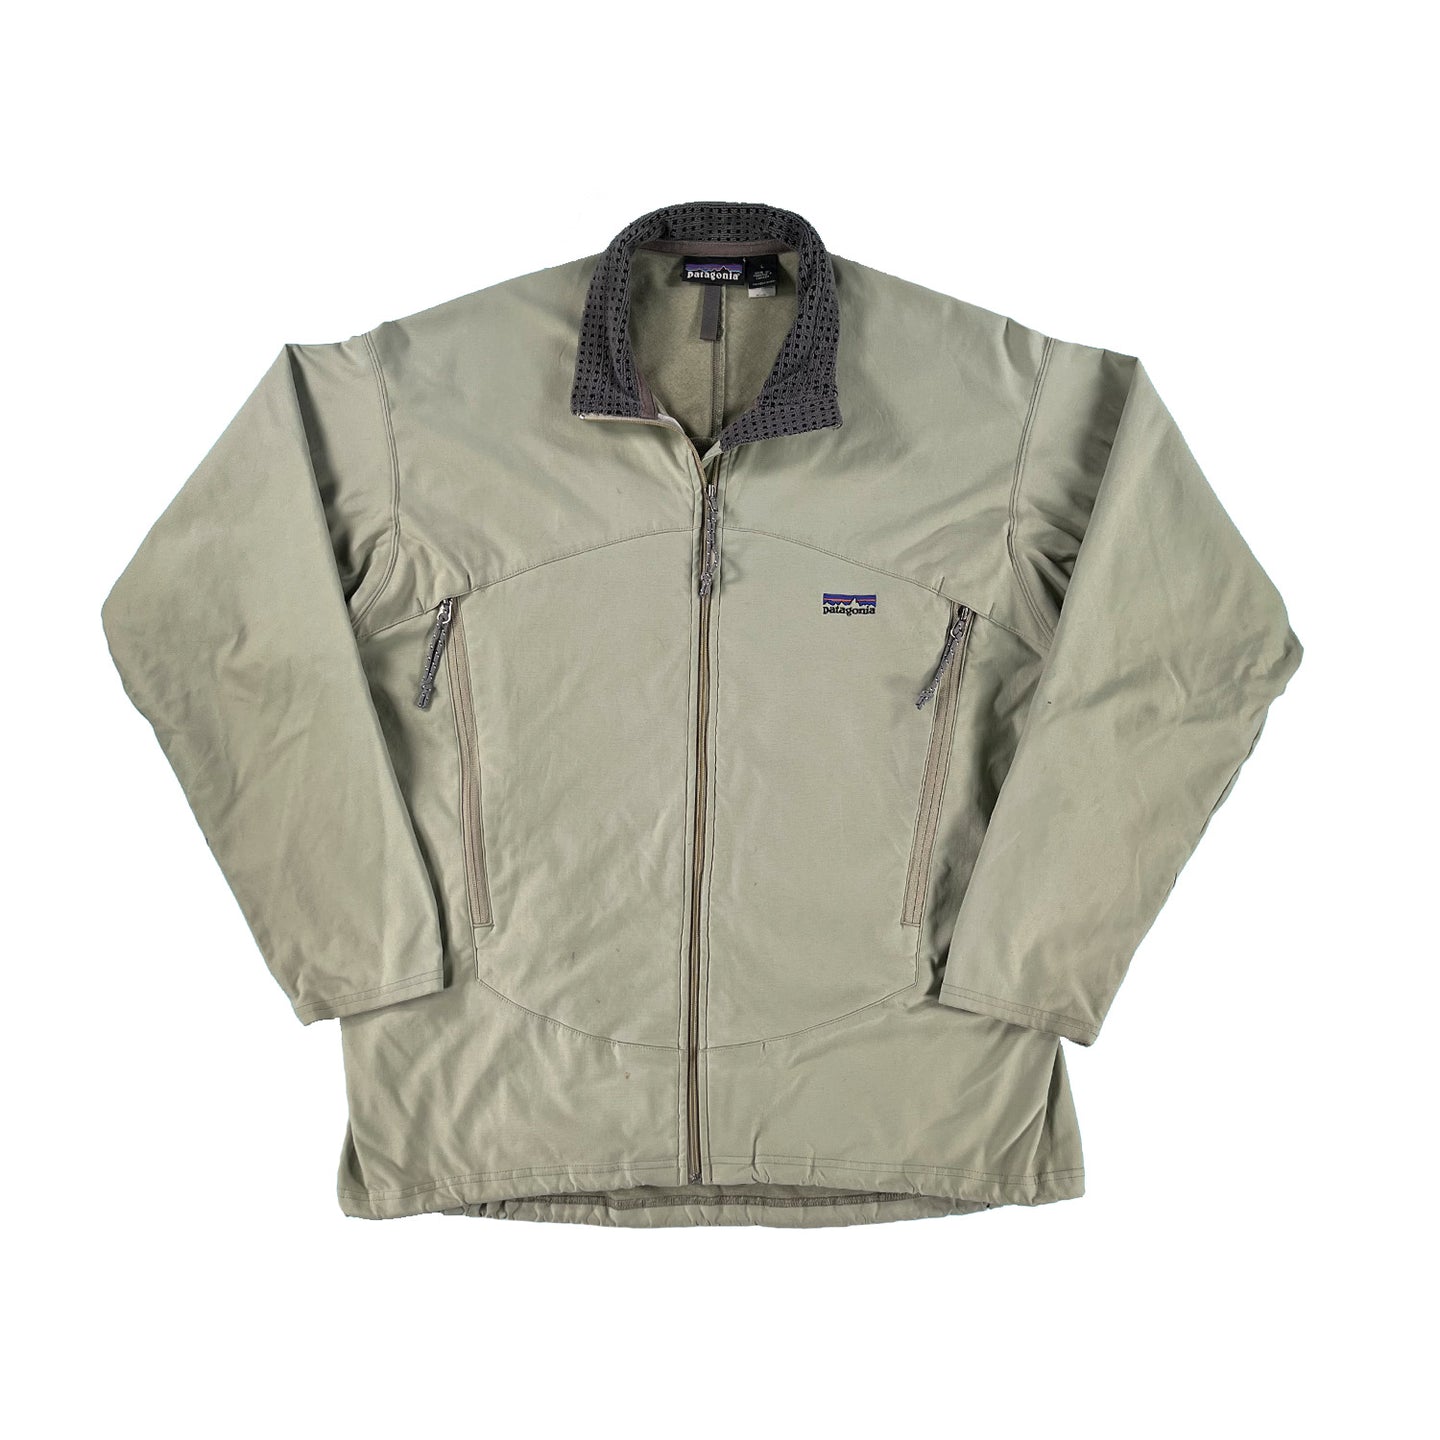 Patagonia light jacket L/XL